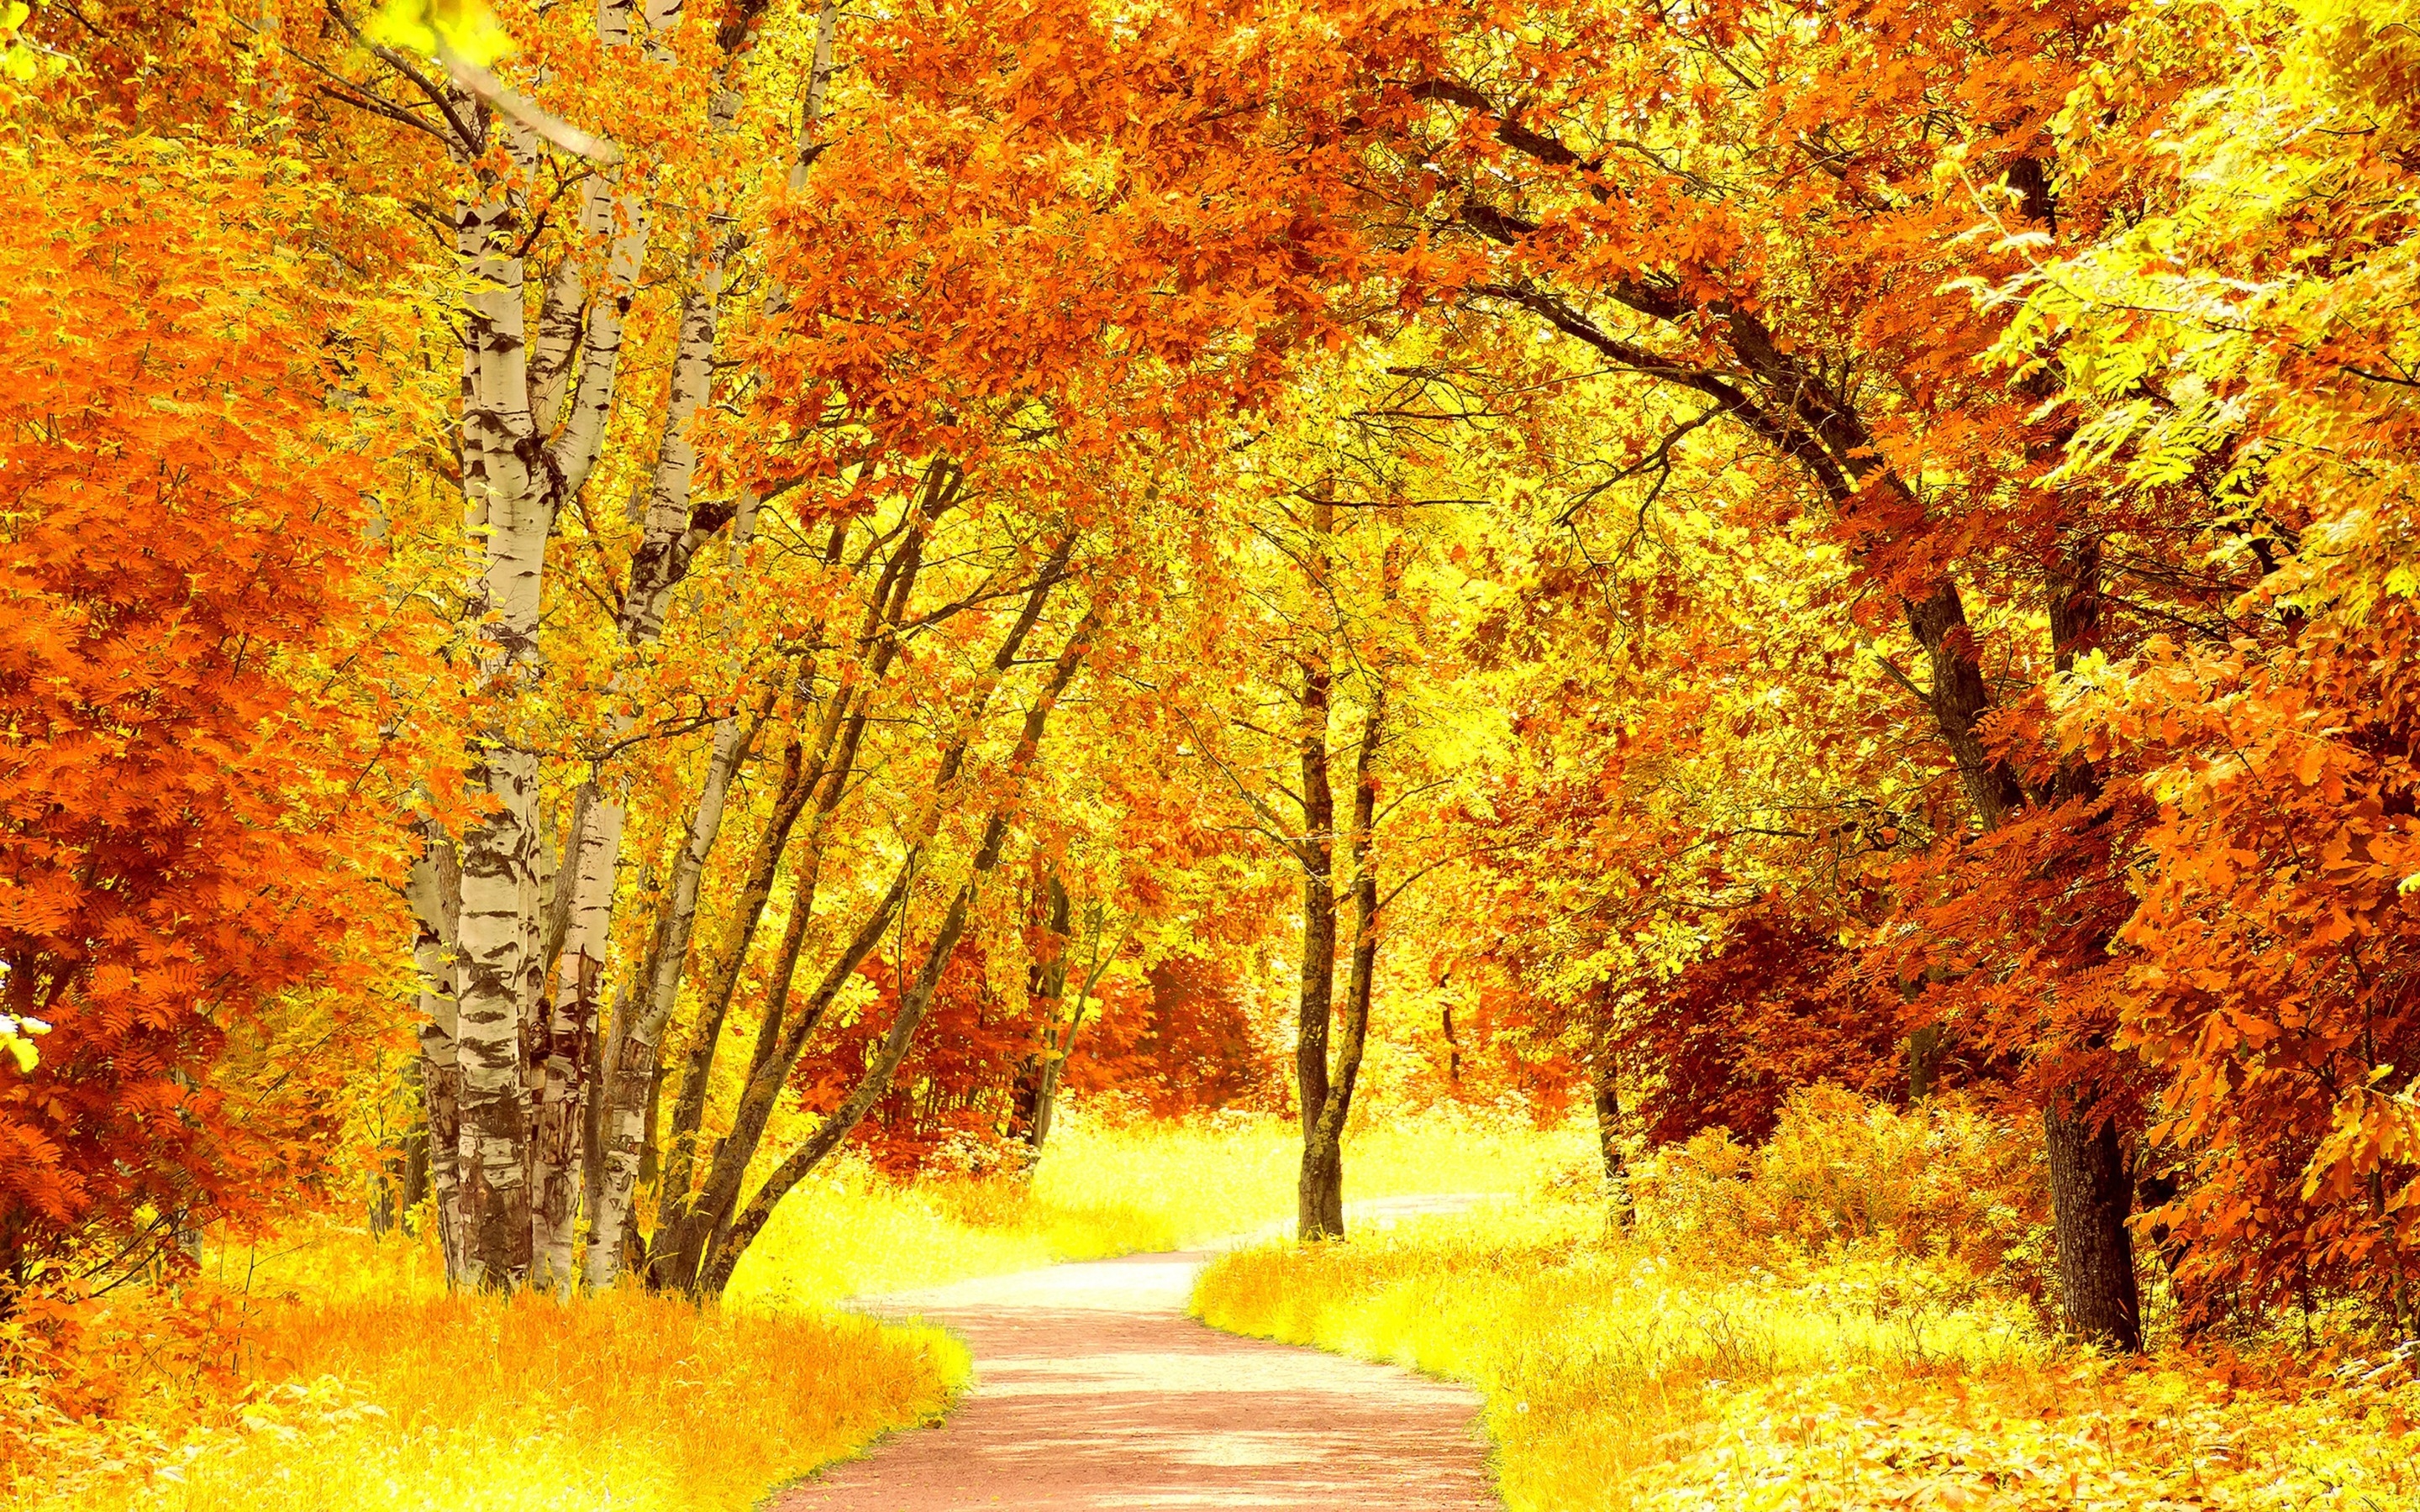 Yellow Autumn Landscape for 2880 x 1800 Retina Display resolution